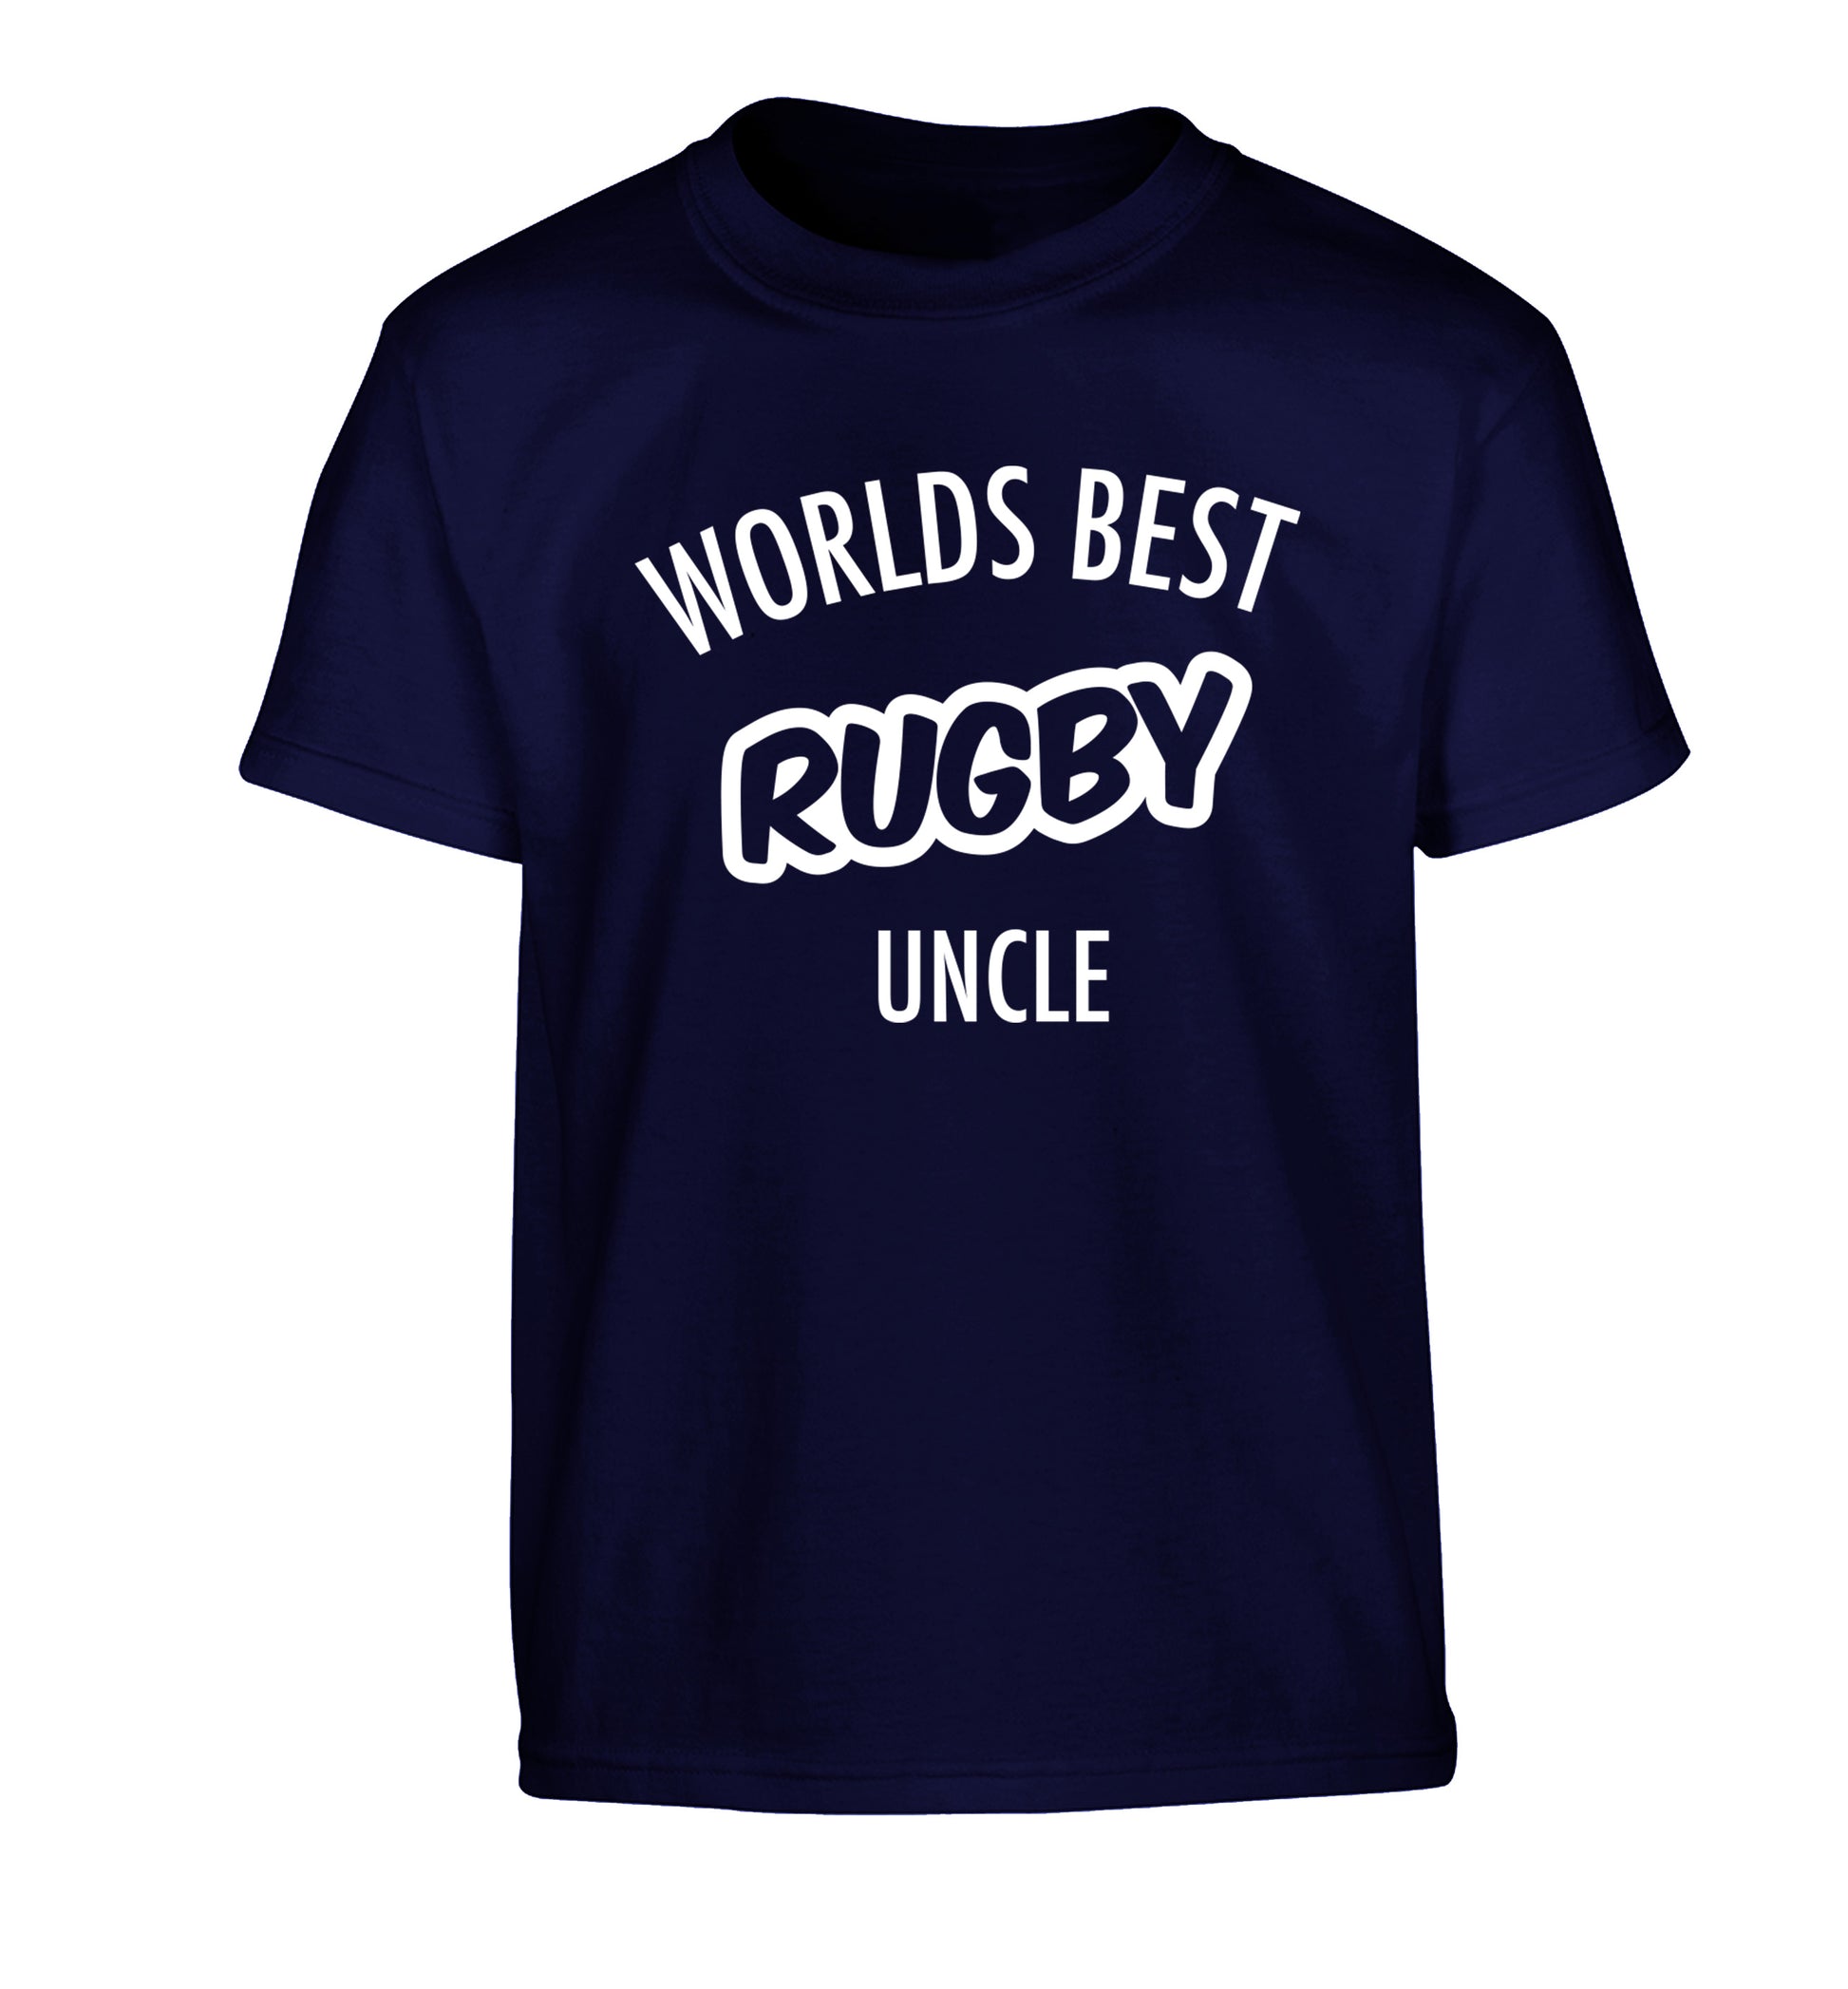 Worlds best rugby uncle Children's navy Tshirt 12-13 Years